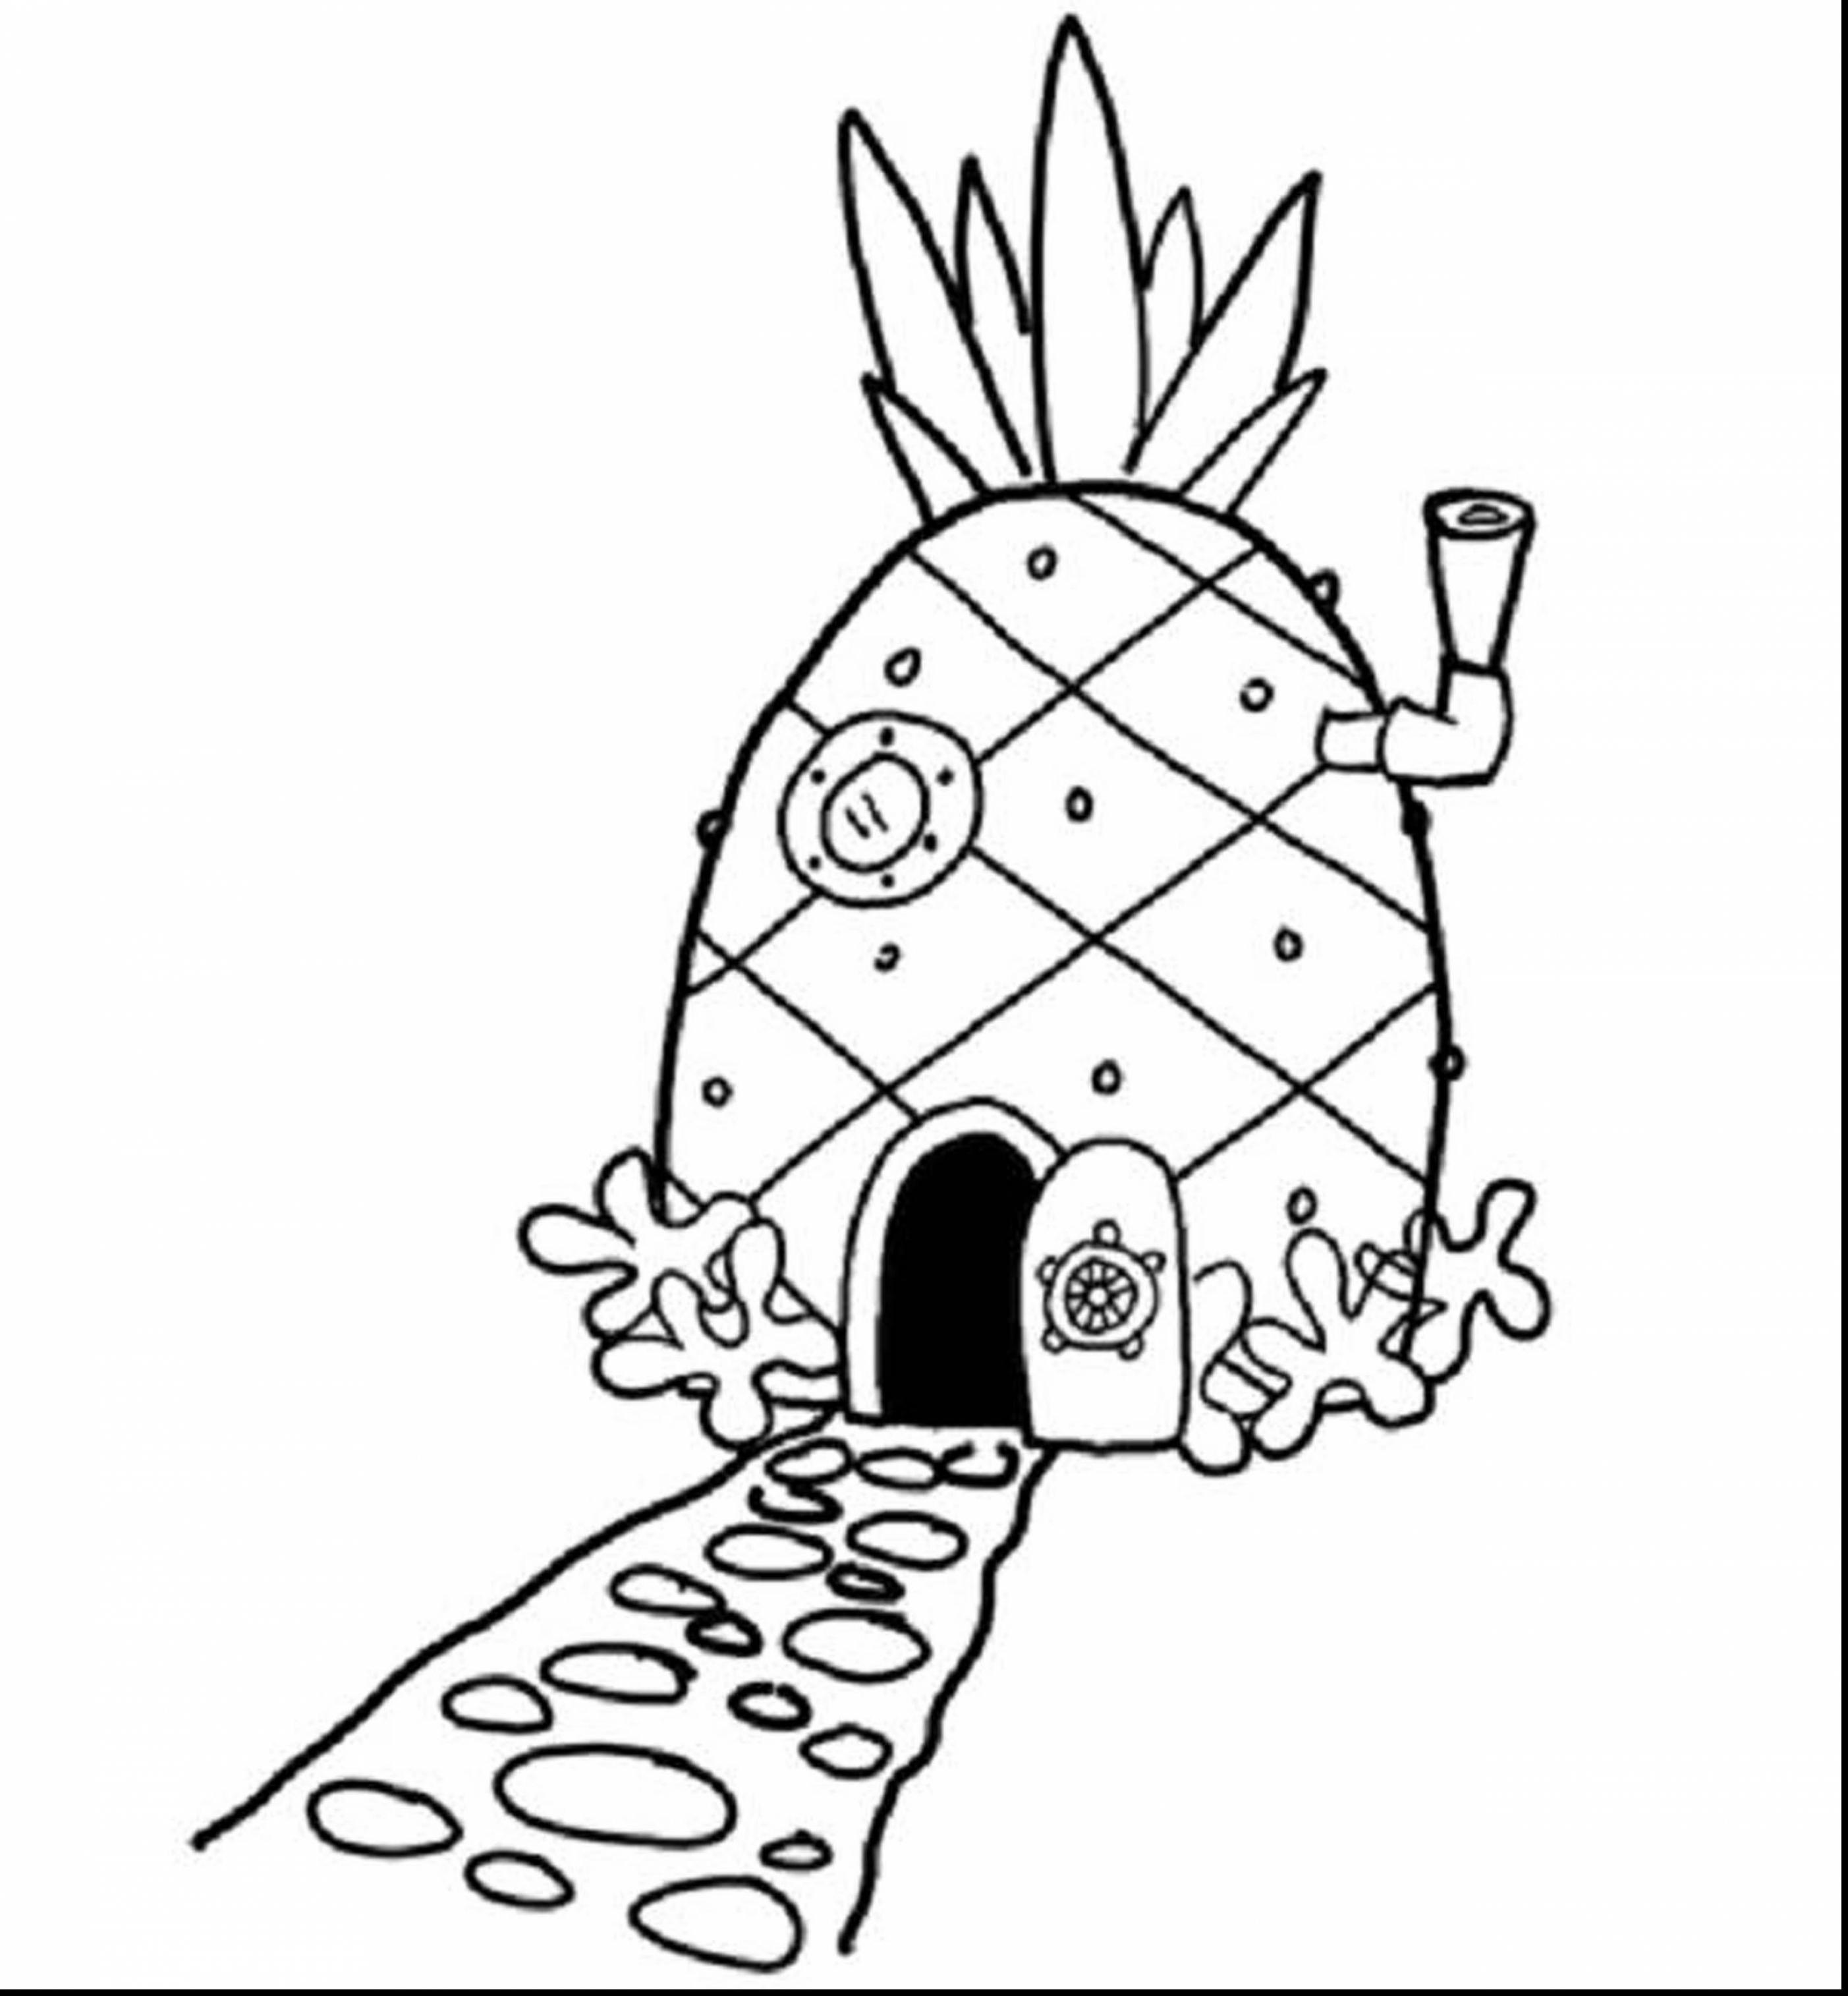 Spongebob And Patrick Drawing at GetDrawings | Free download